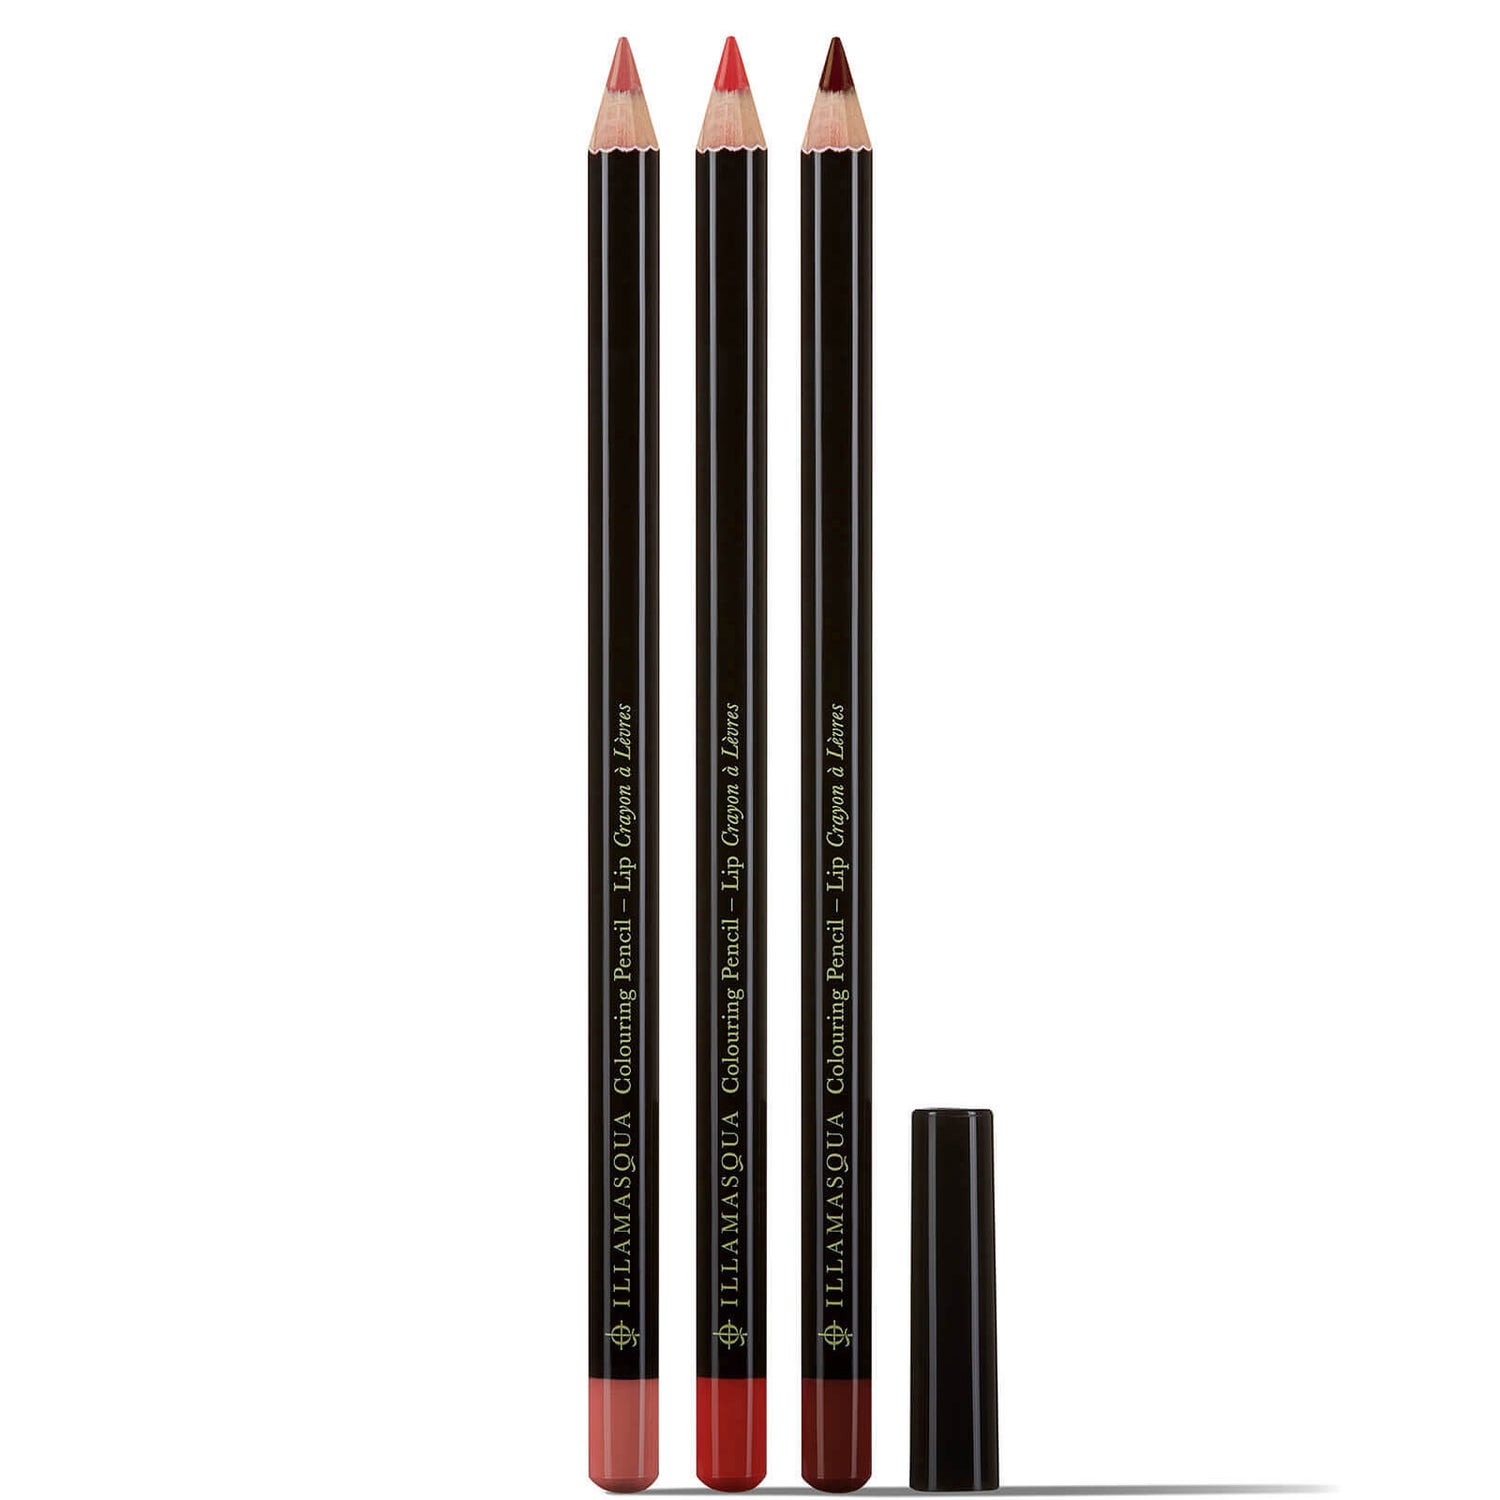 Illamasqua Colouring Lip Pencil 1,4 g (ulike nyanser)